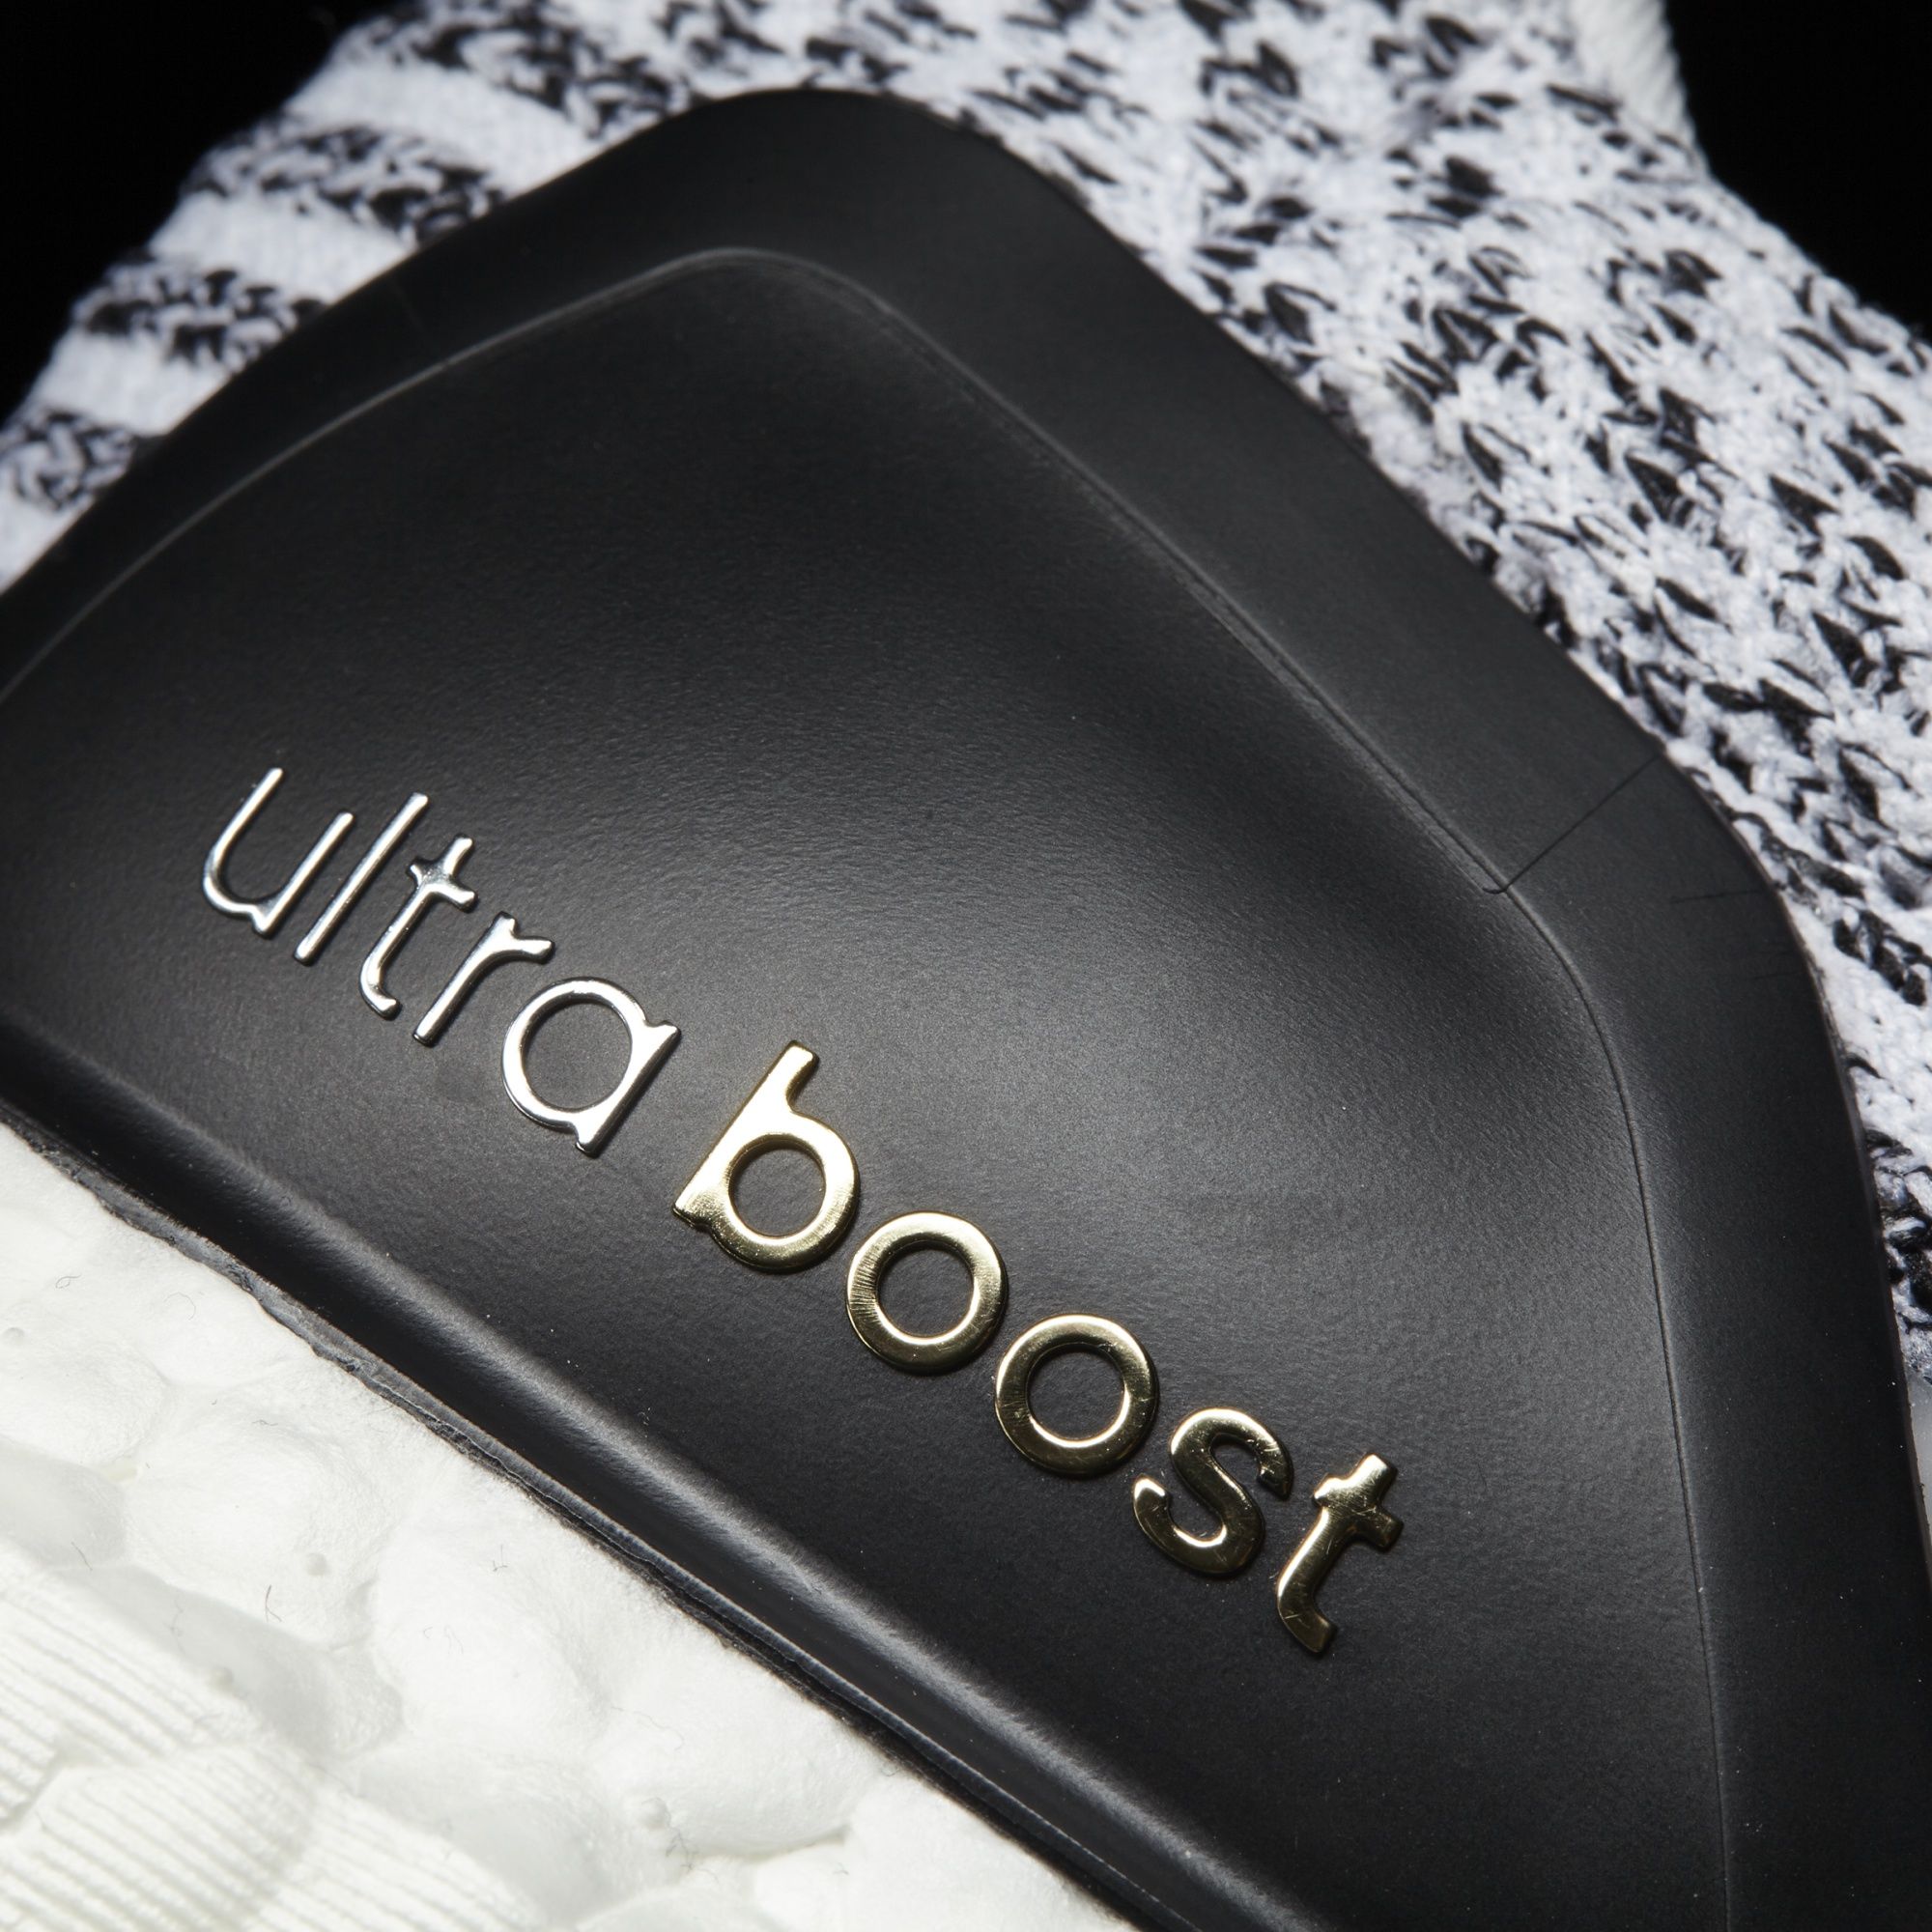 Adidas Ultra Boost
Footwear White / Core Black